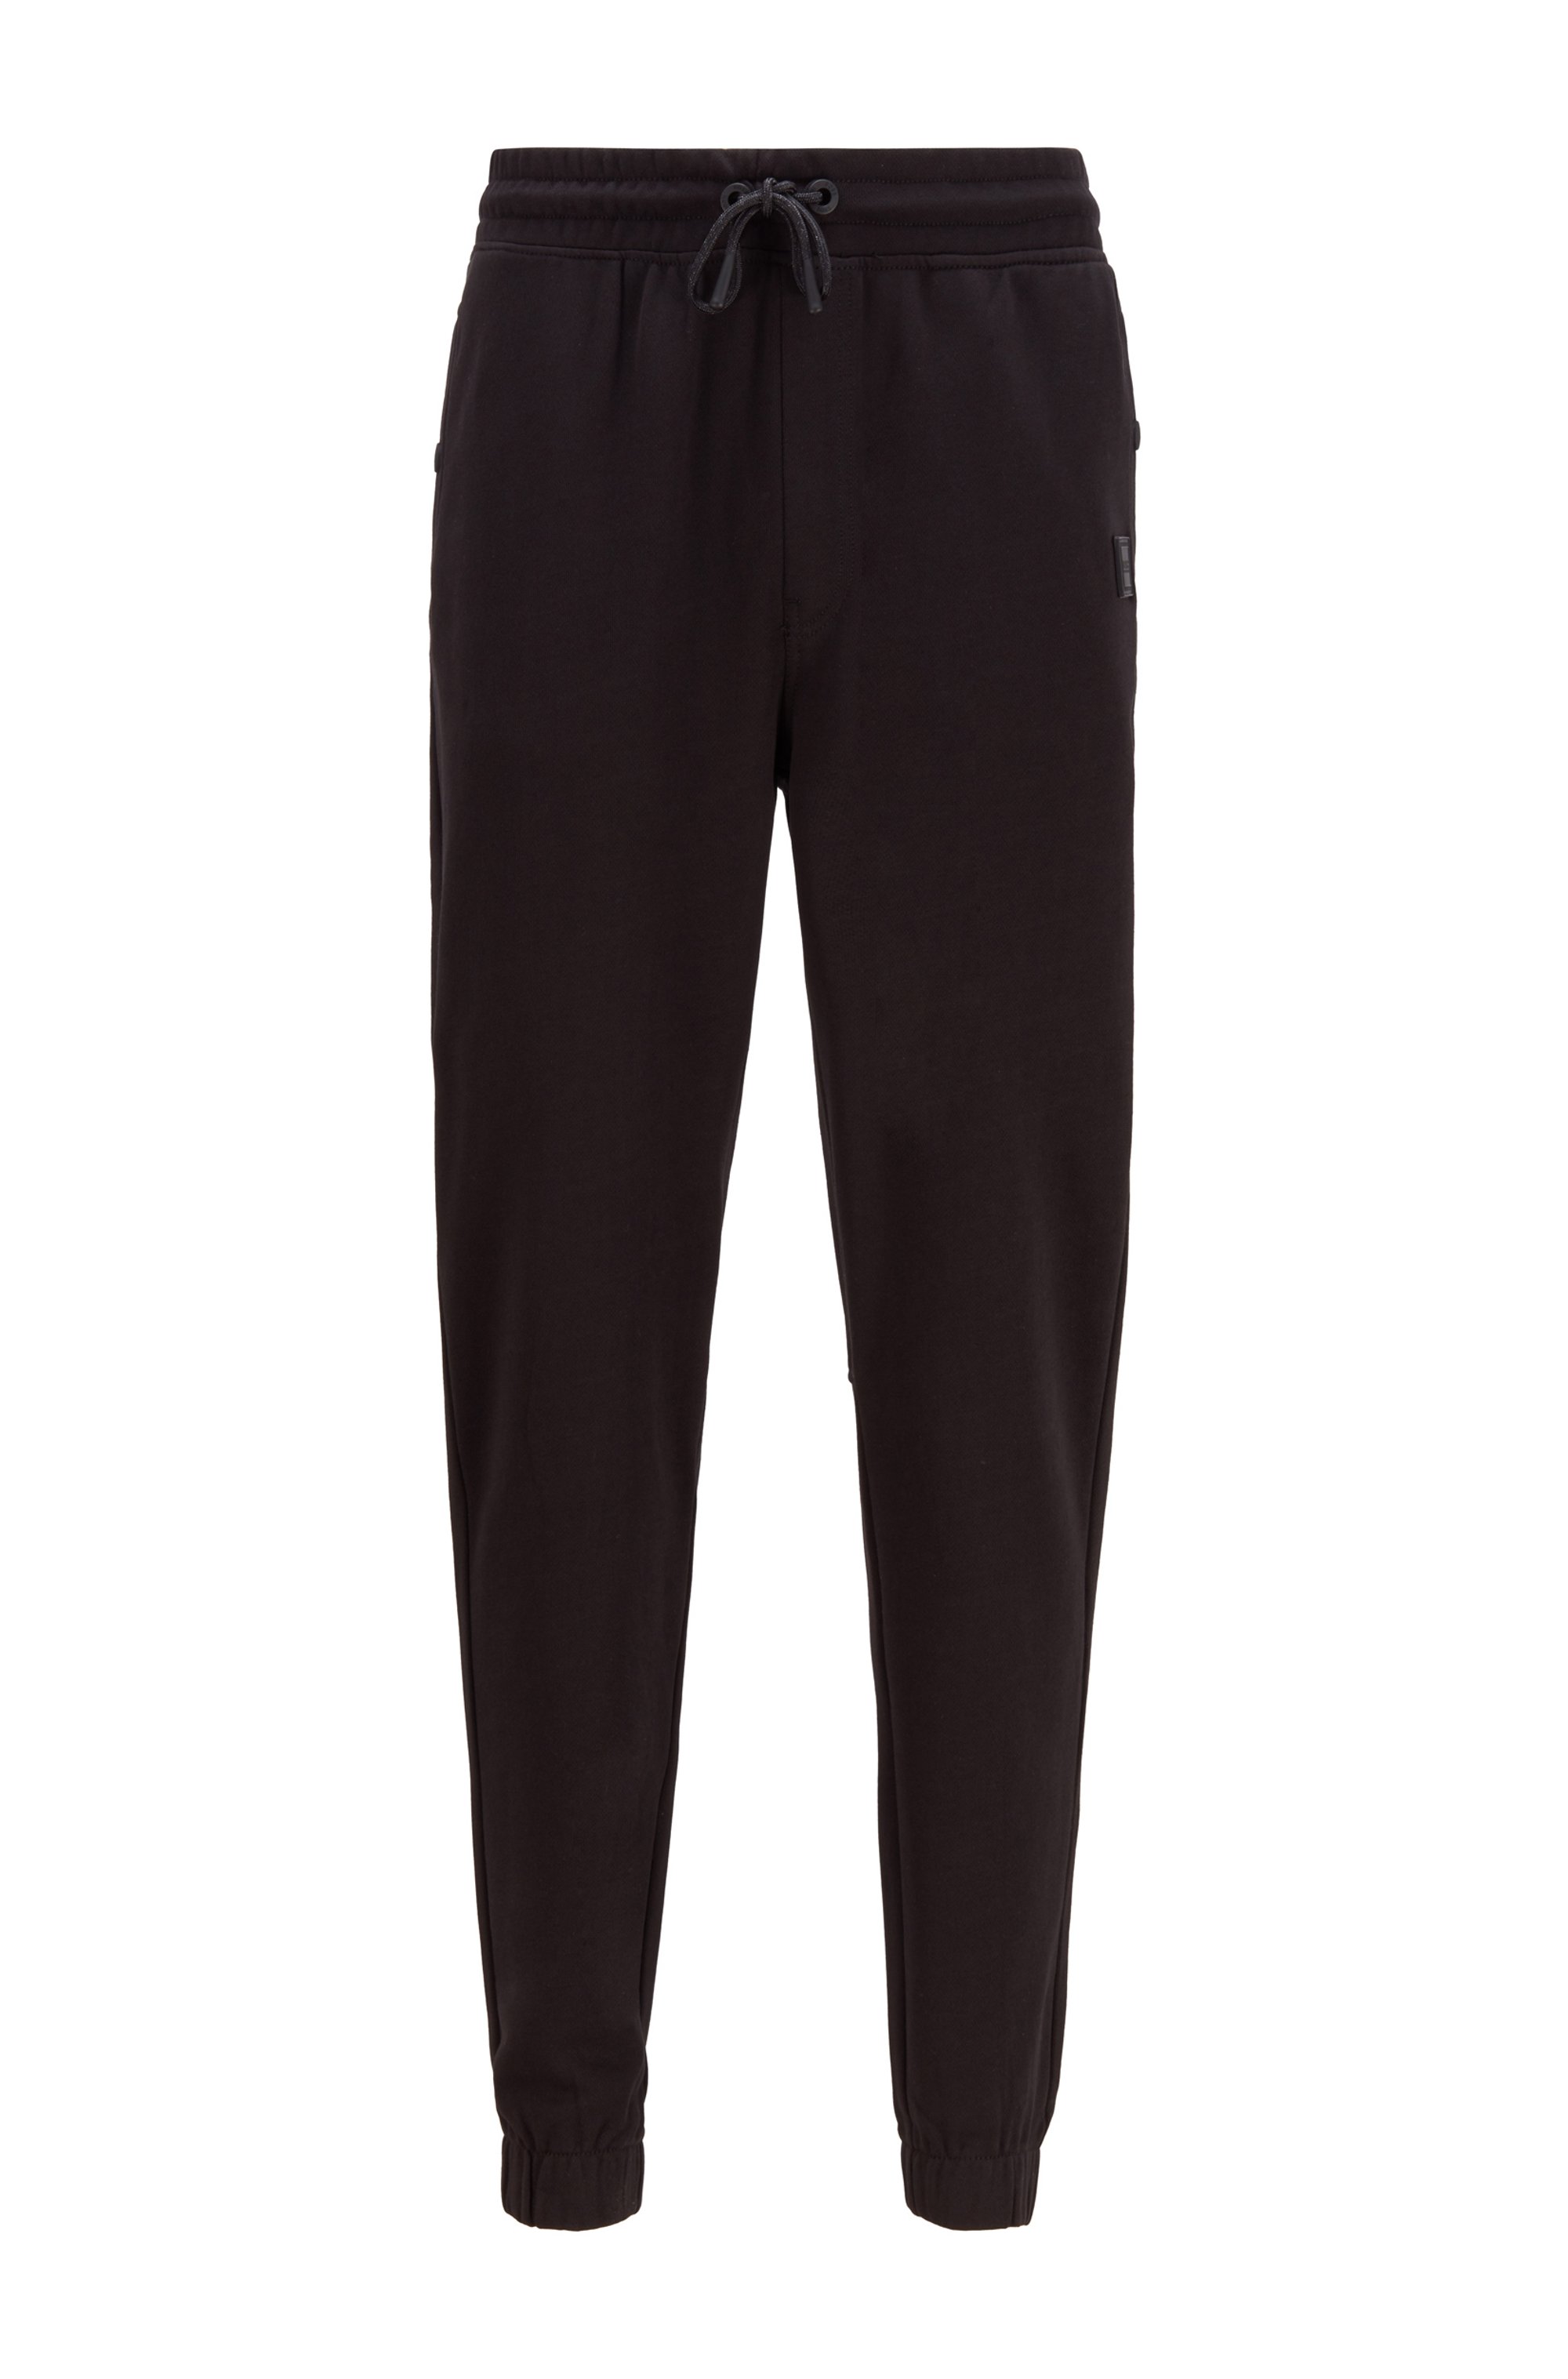 Pantalones relaxed fit de rizo de algodón con detalles de goma, Negro